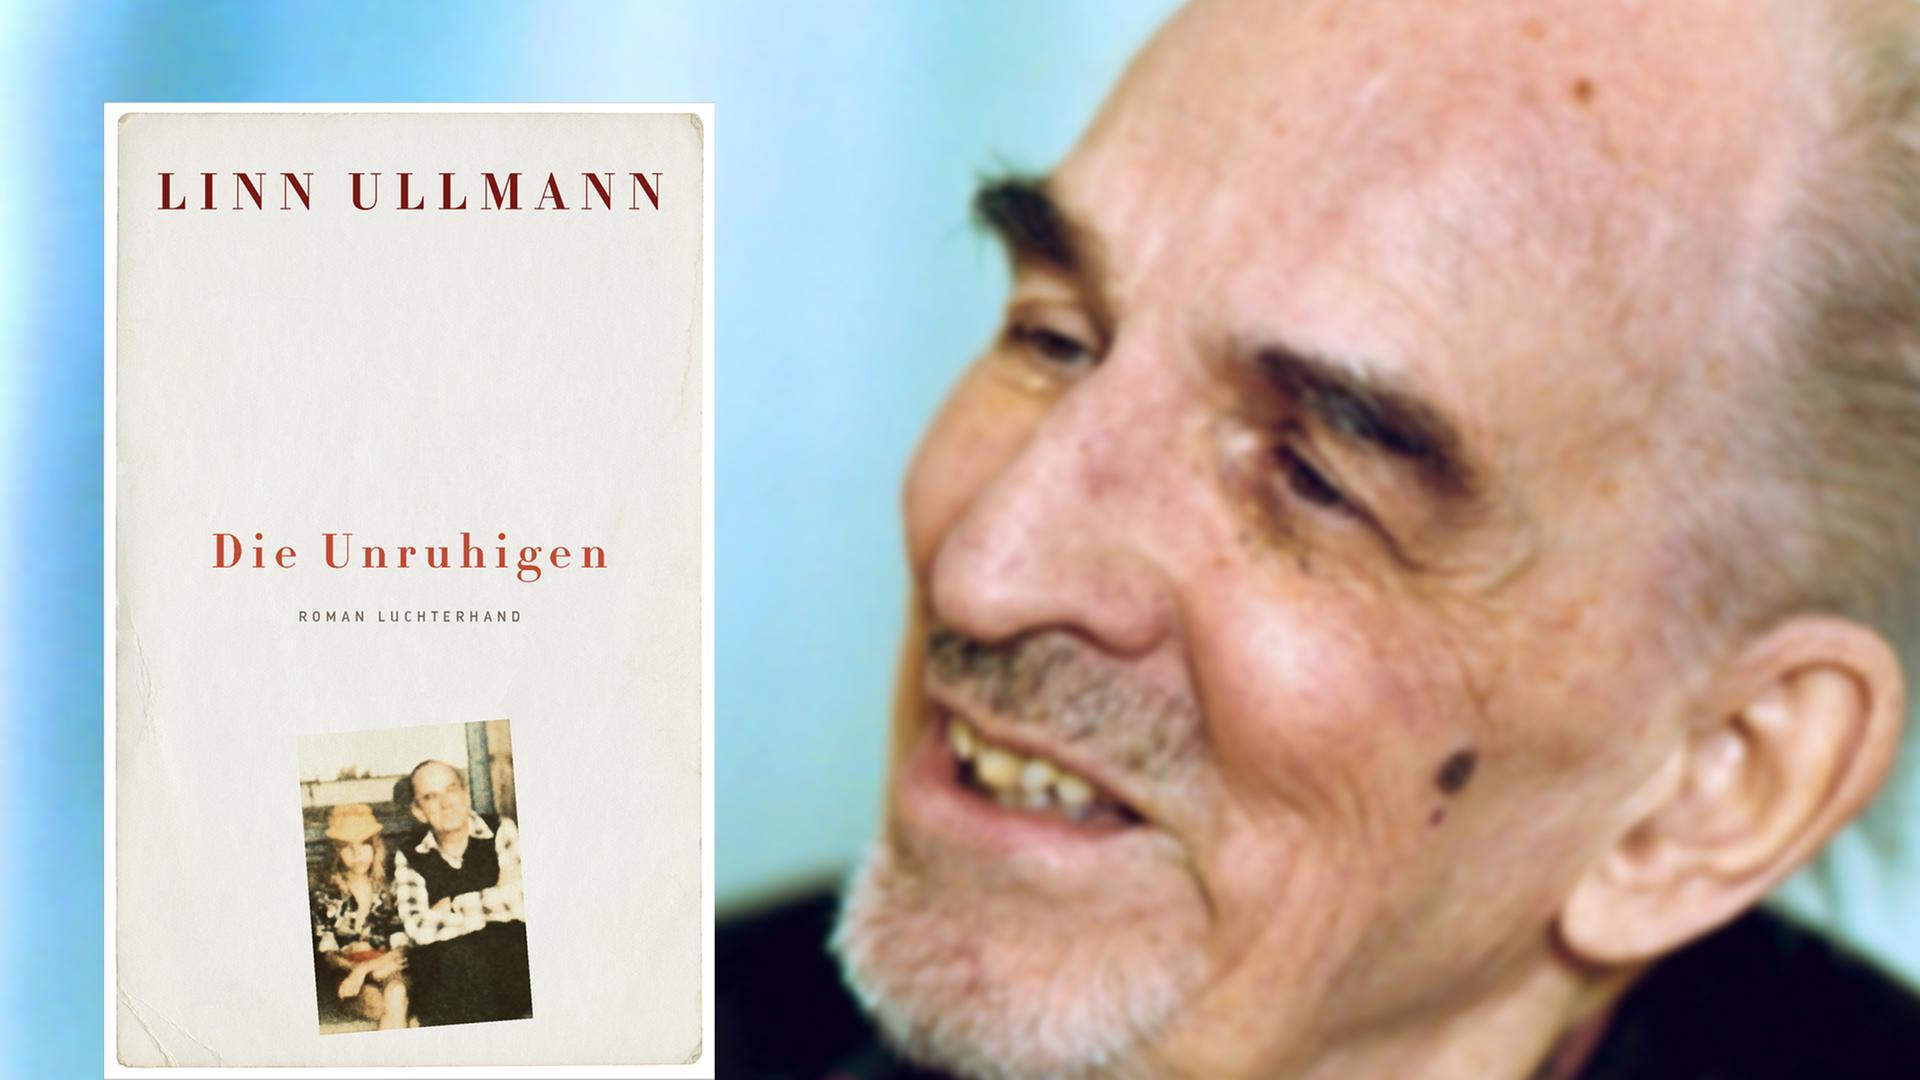 Buchcover Linn Ullmann: "Die Unruhigen"